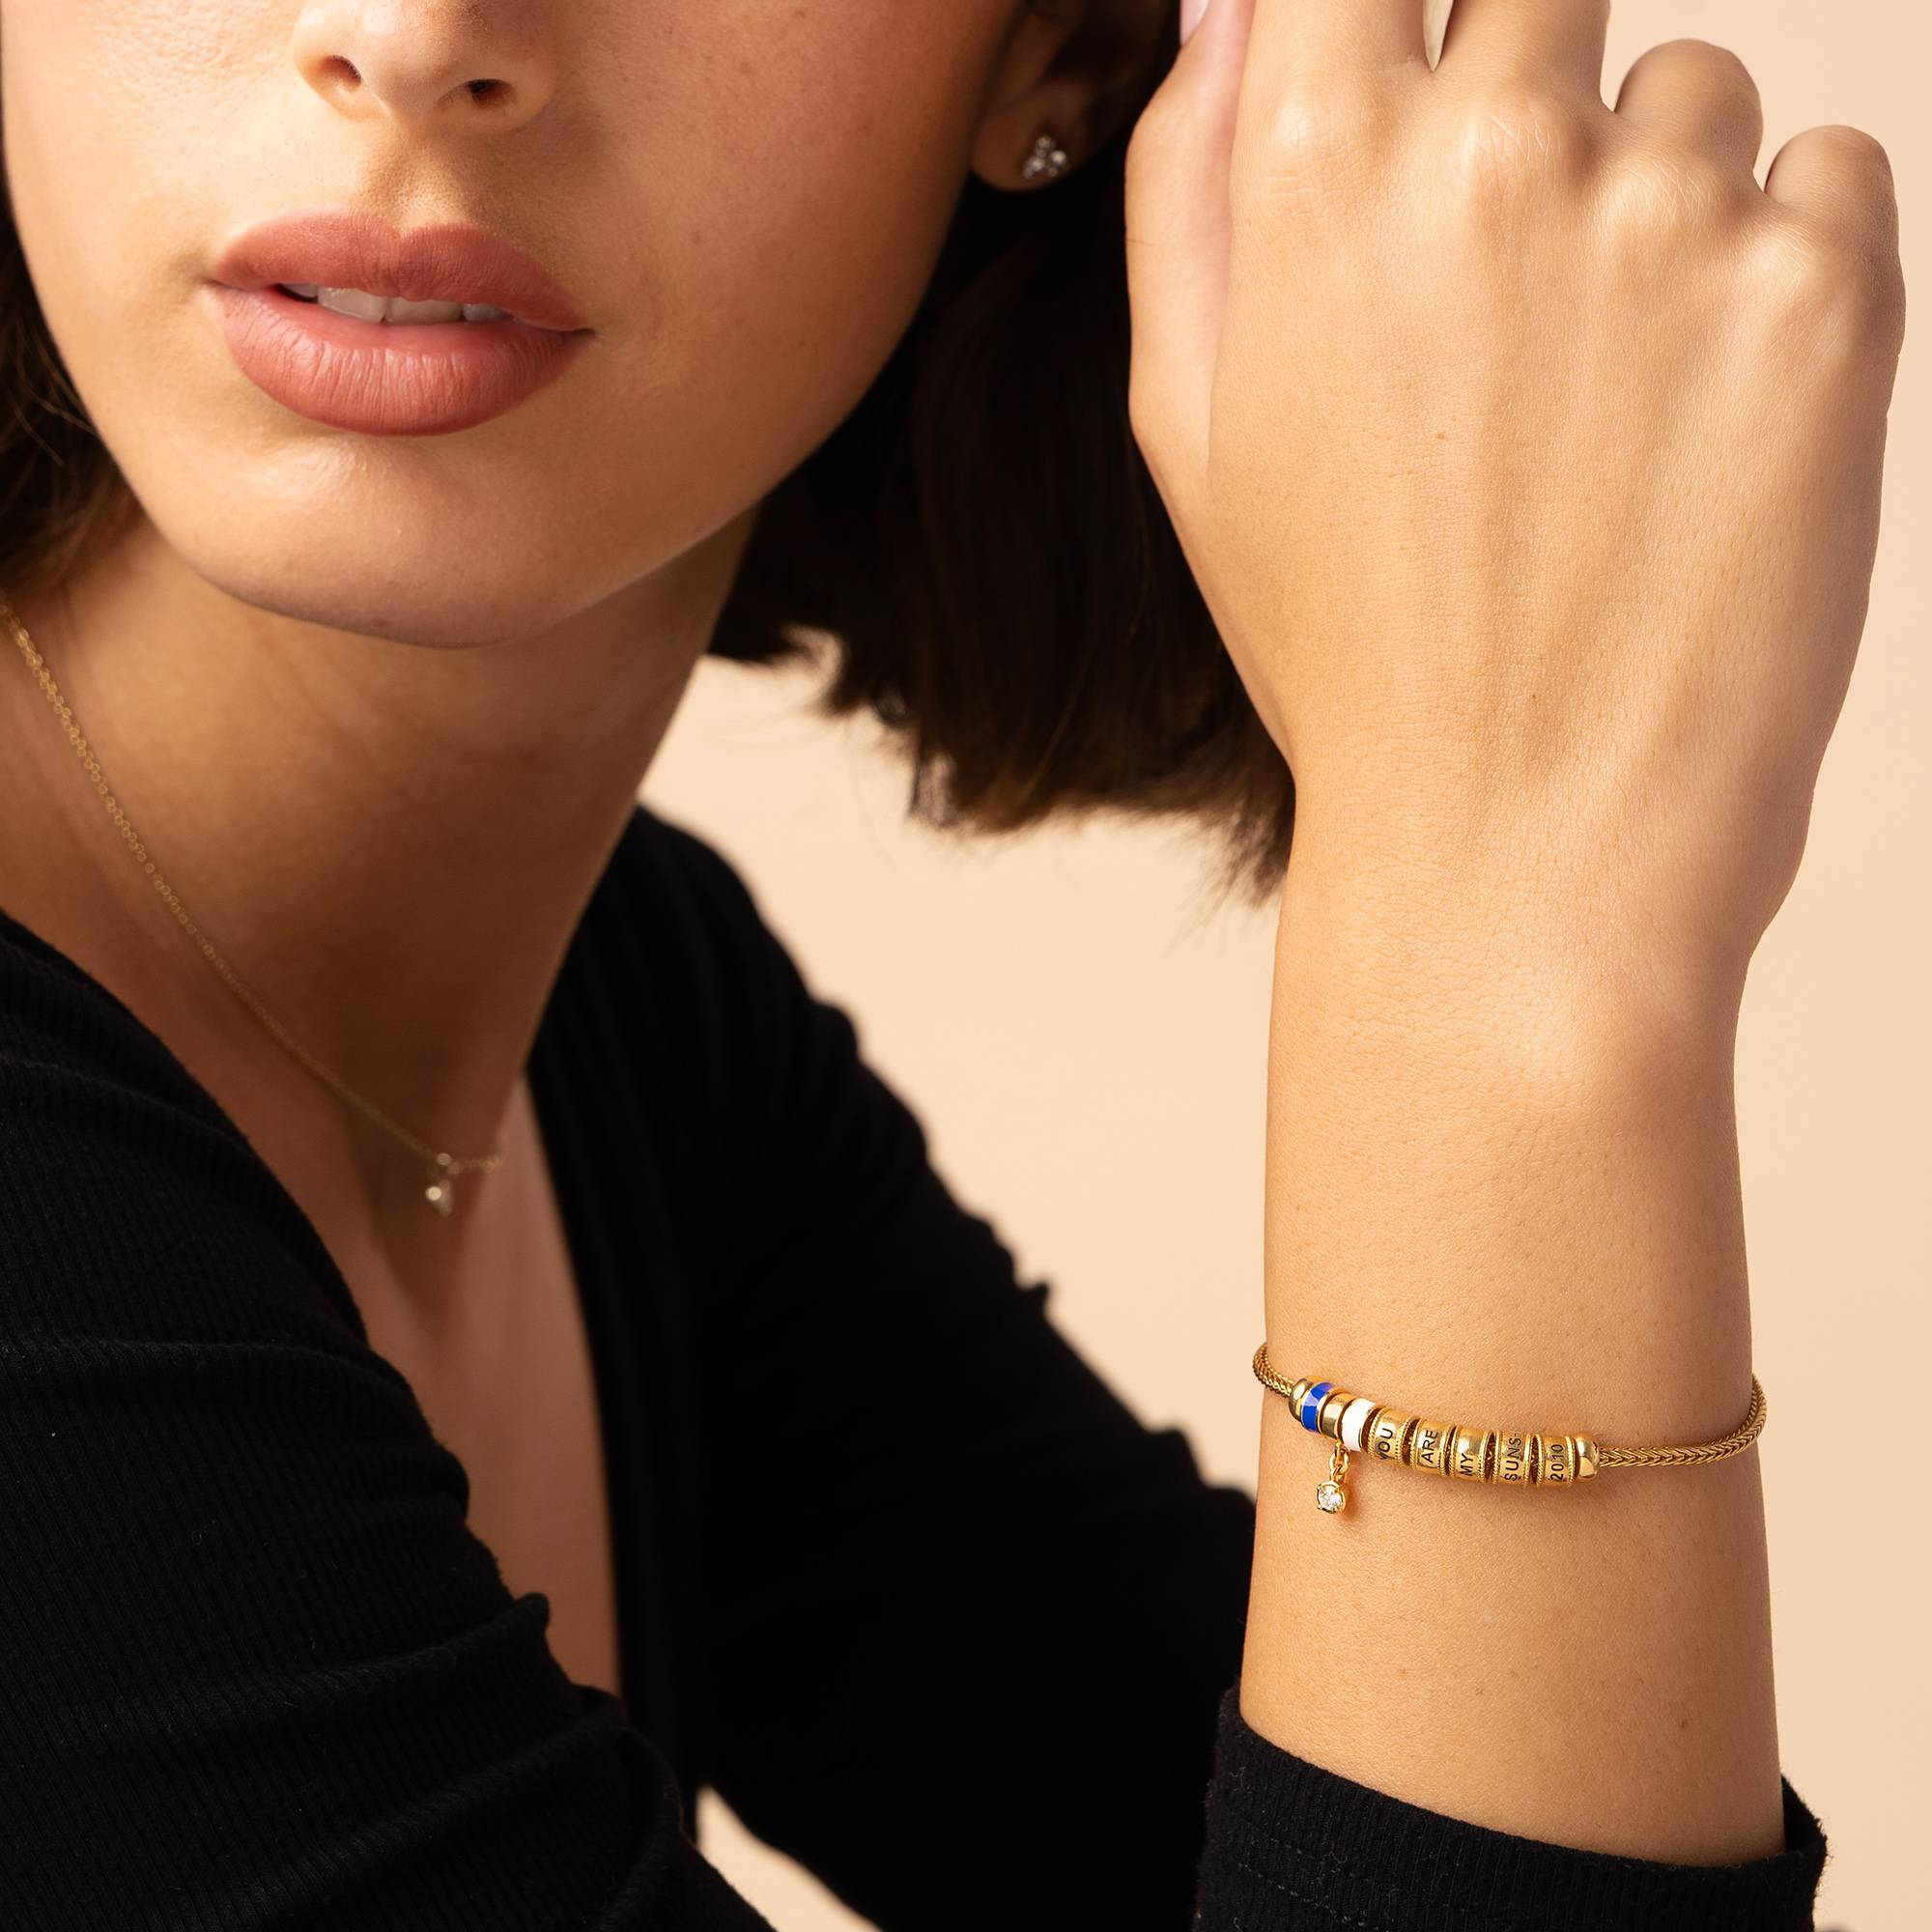 Linda Toggle Heart Charm Bracelet with Diamond & Enamel in 18K Gold Plating-5 product photo